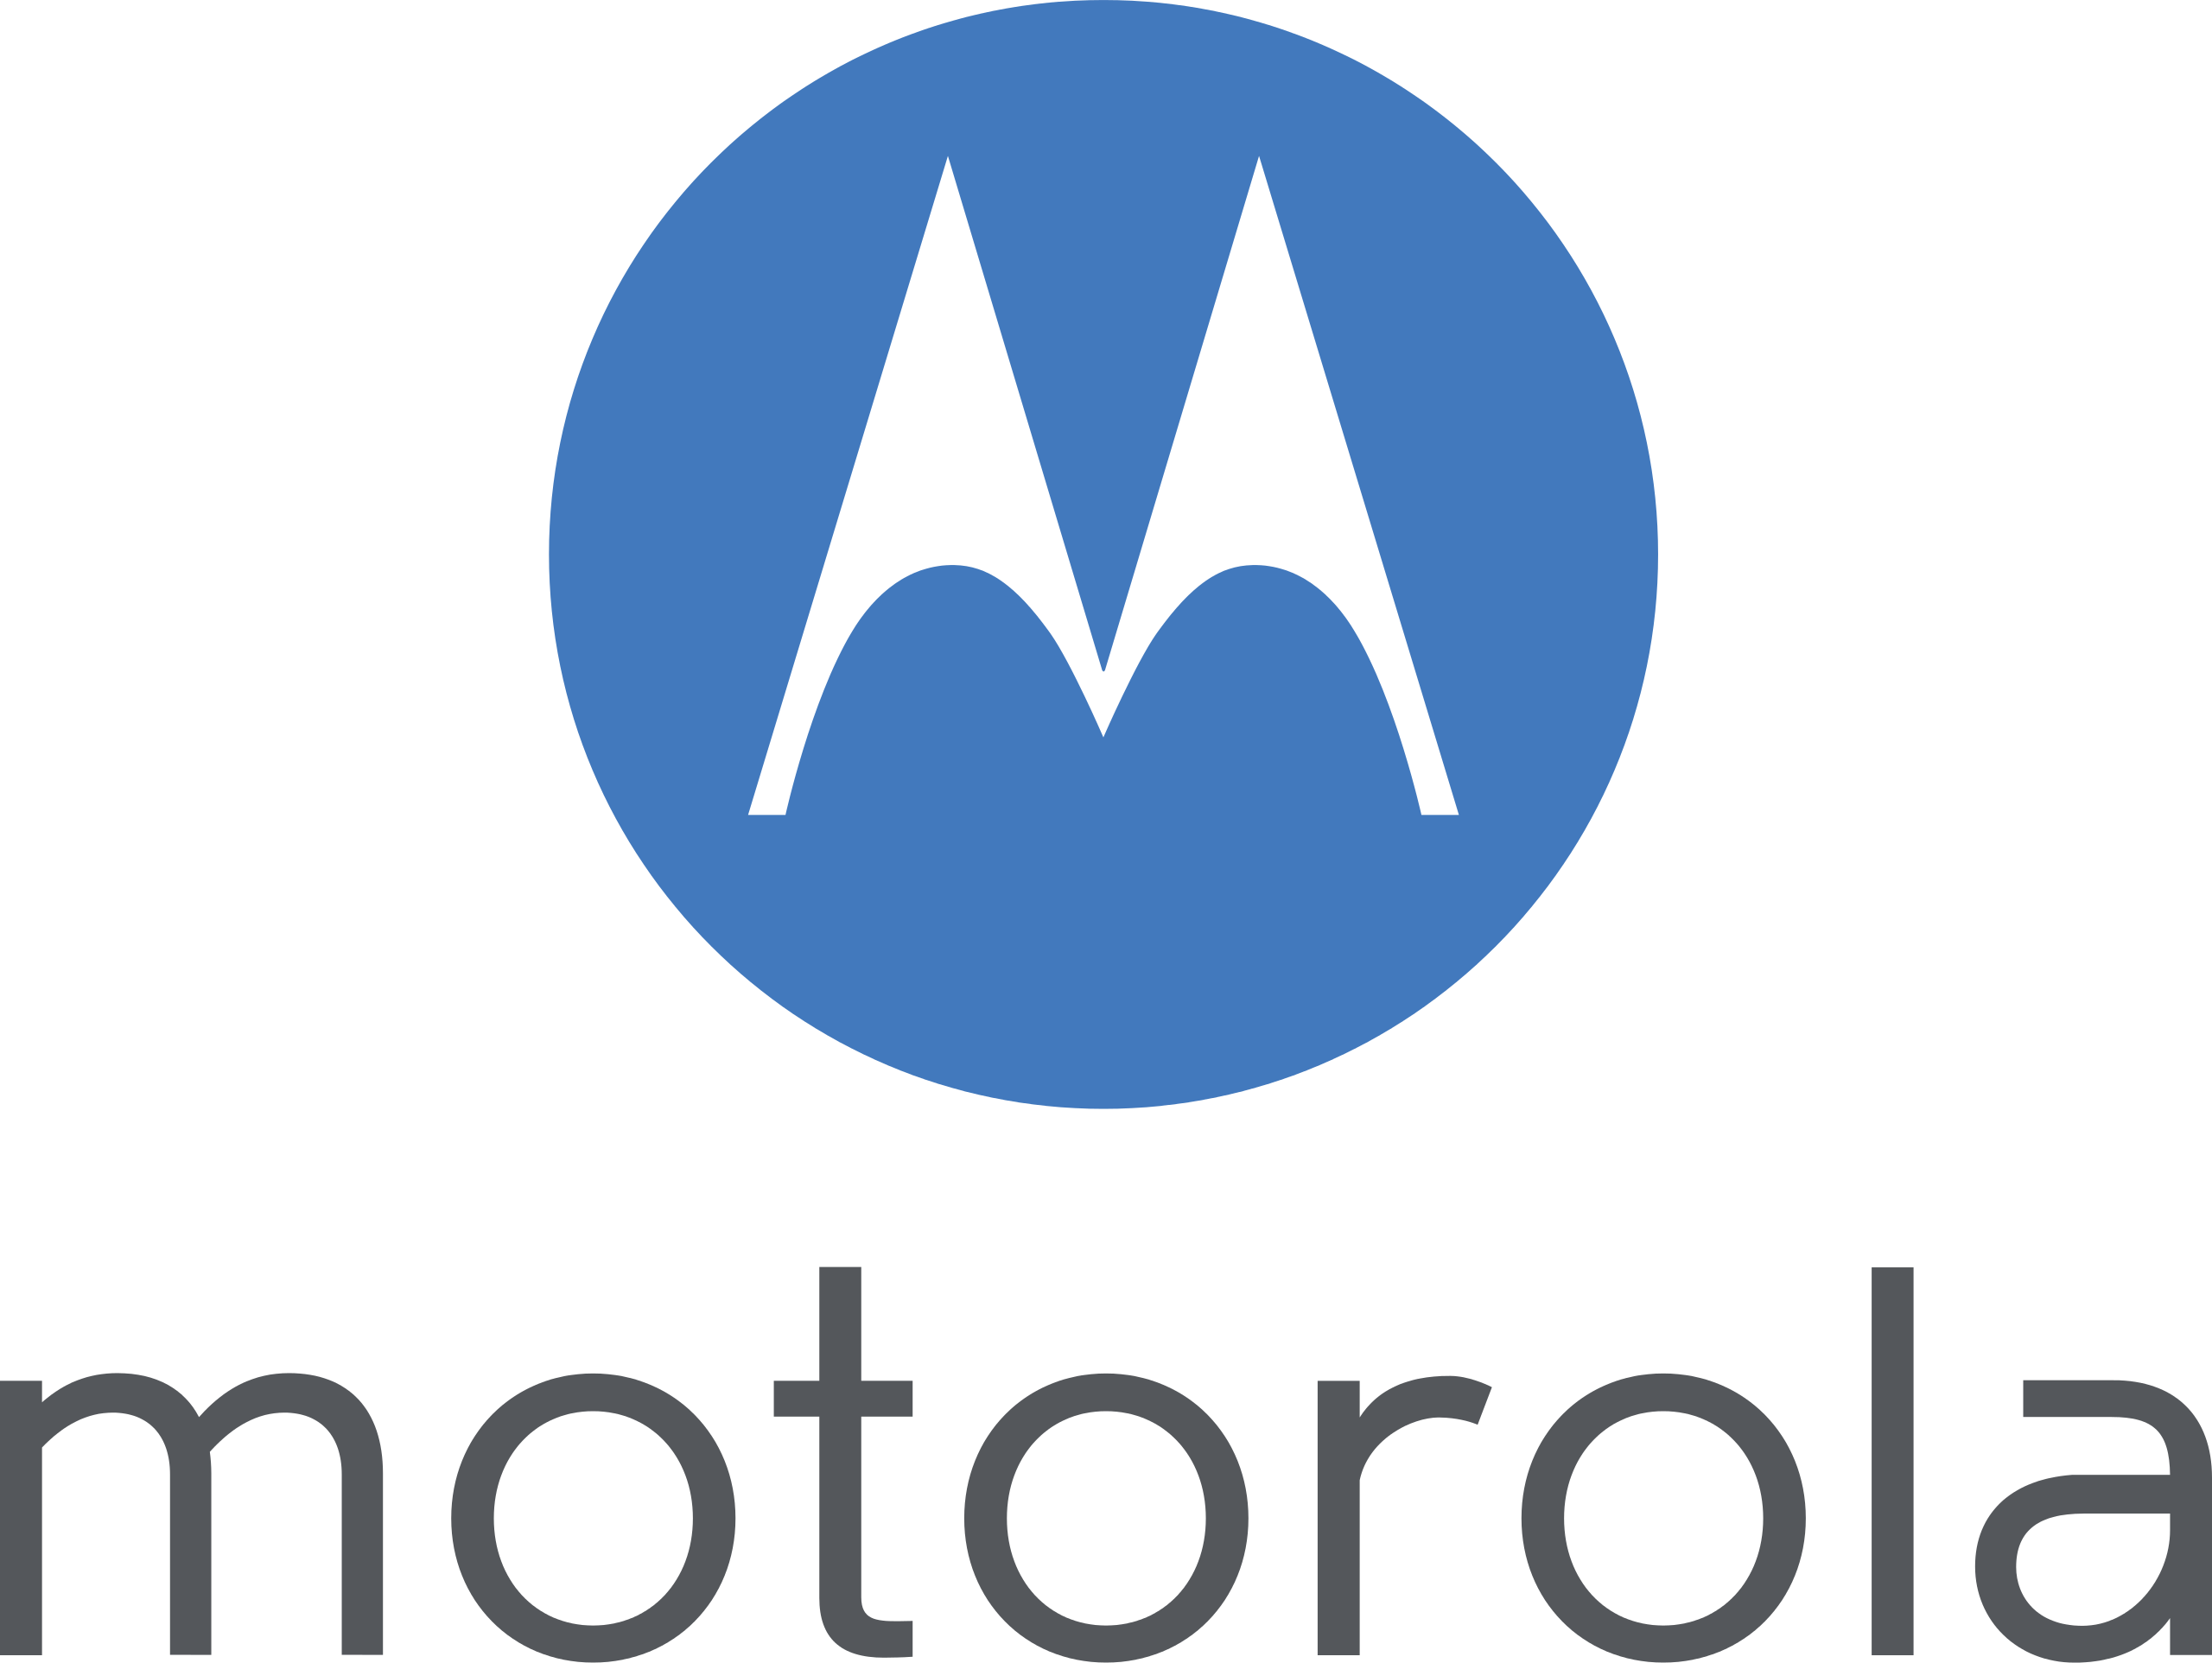 Motorola infolinia | Kontakt, telefon, numer, adres, dane kontaktowe